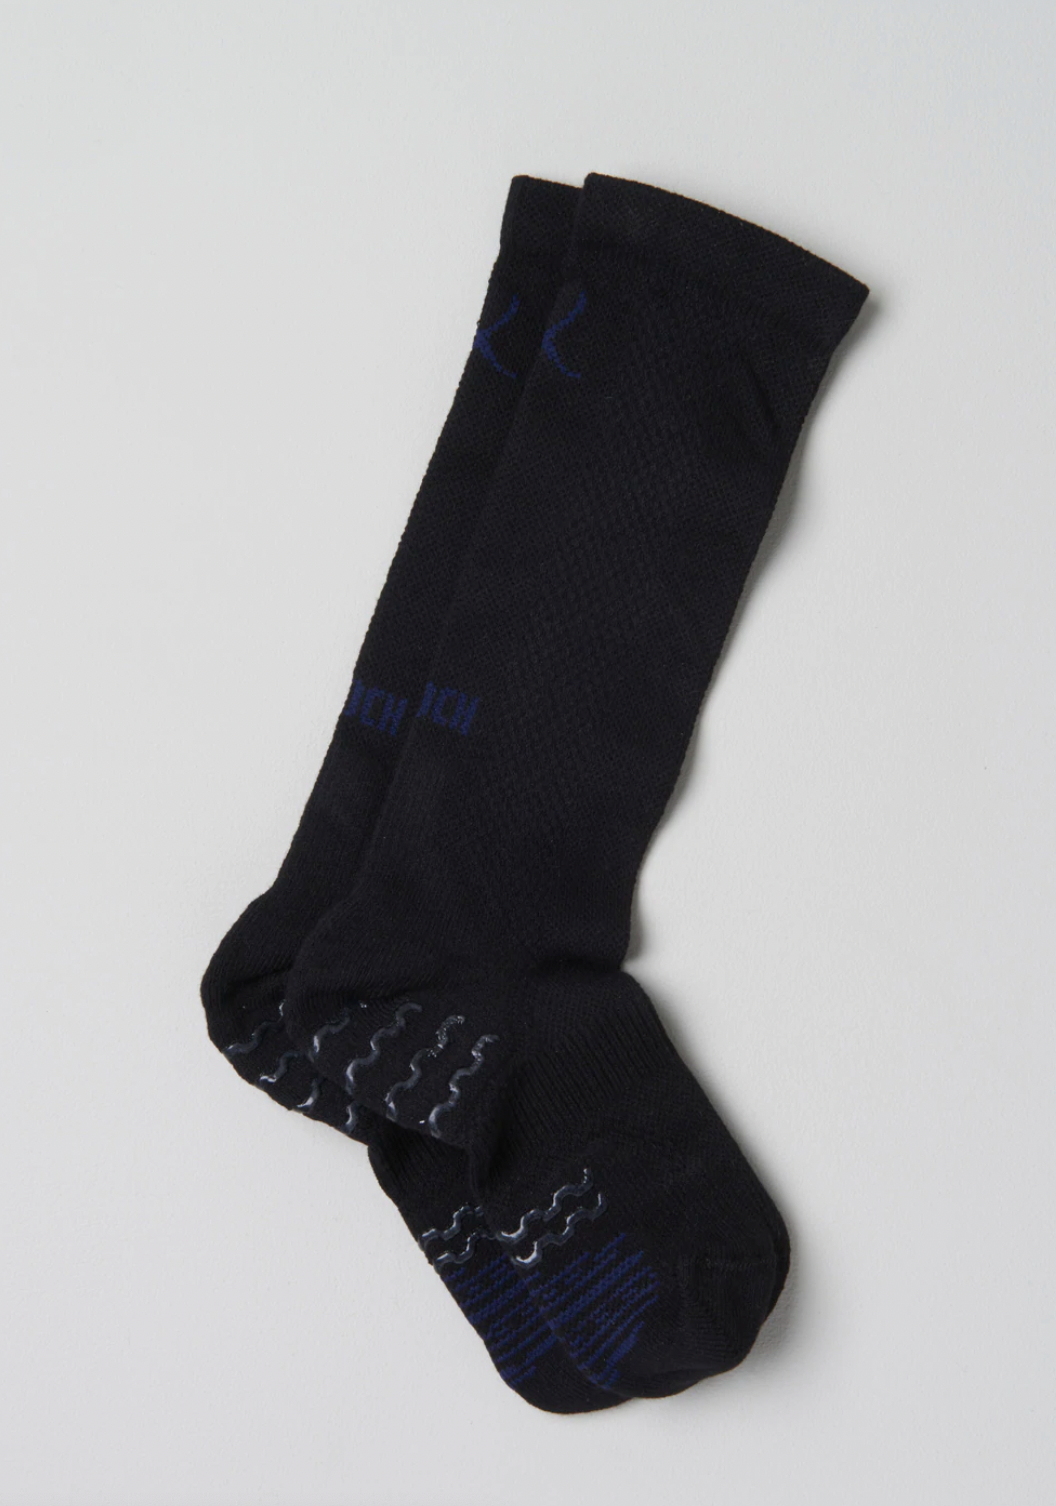 blochsox dance socks in black from the collective dancewear 